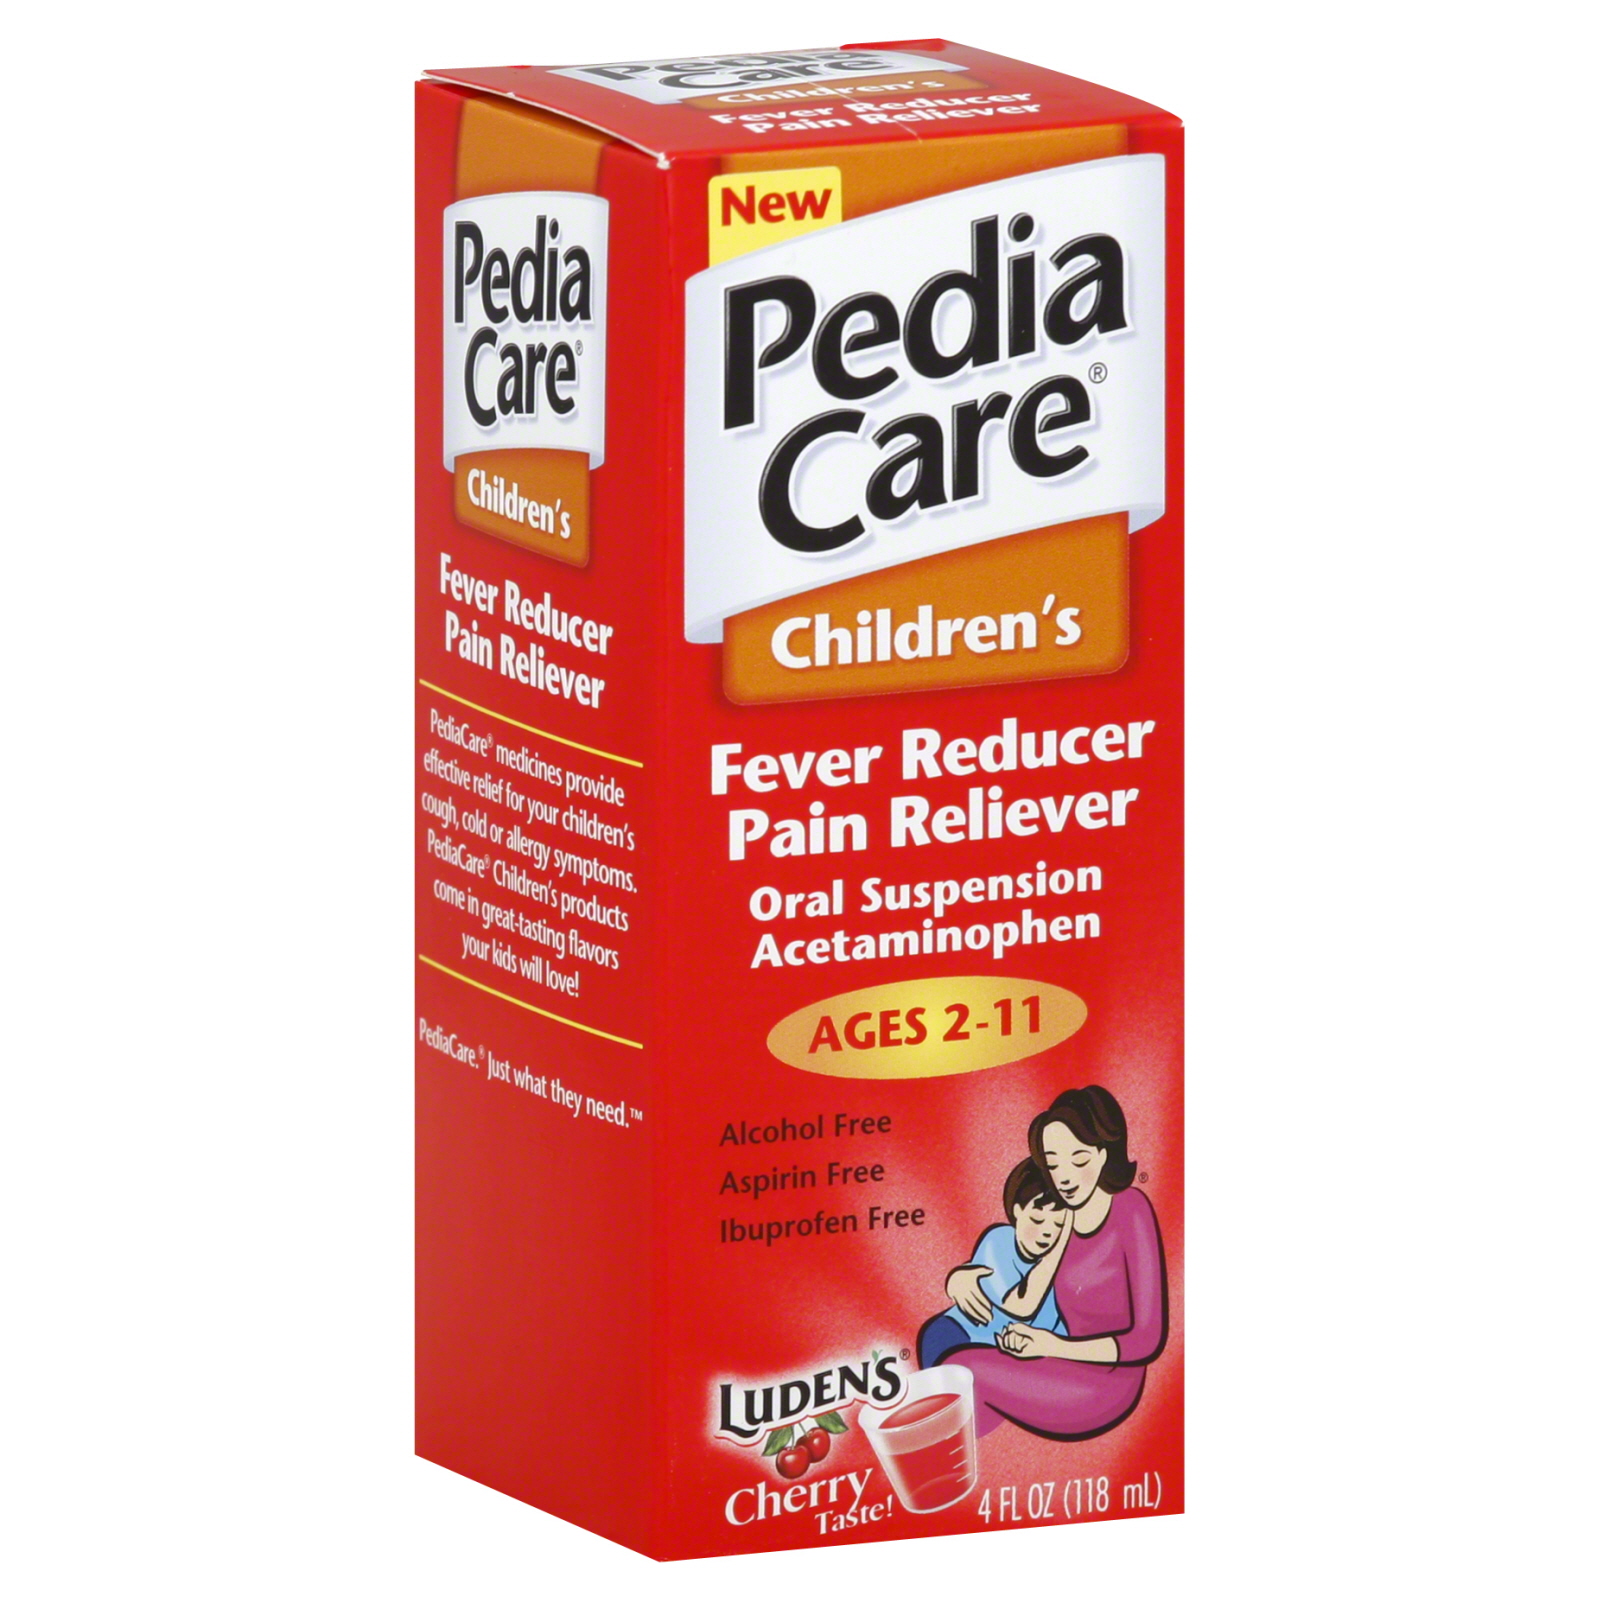 Pedia Care Children's Fever Reducer/Pain Reliever, Luden's Cherry Taste 4 fl oz (118 ml)